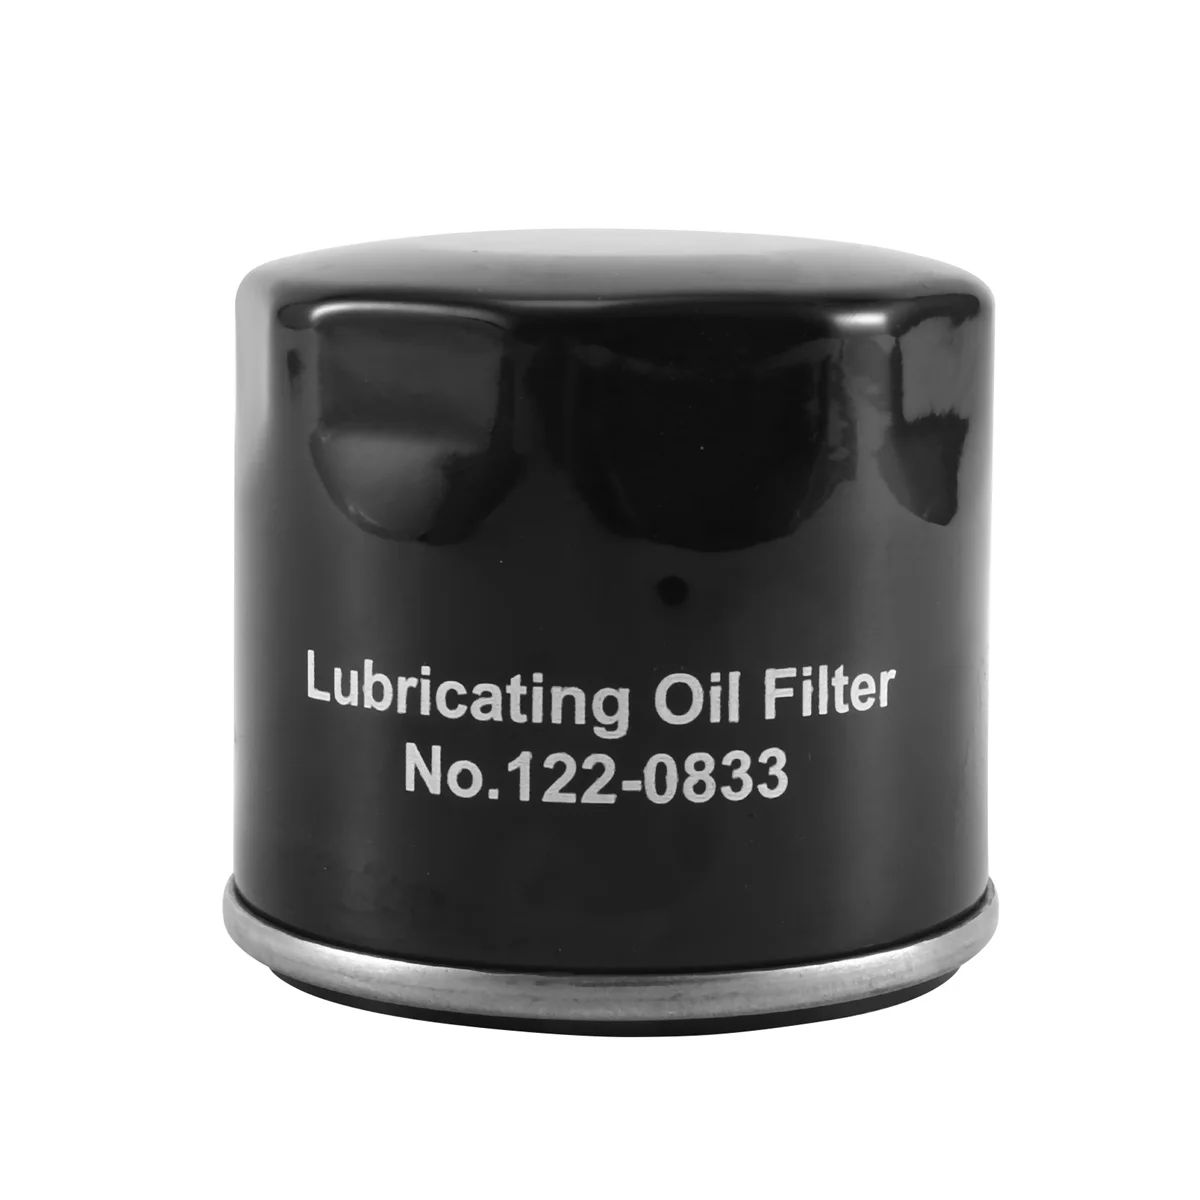 

For Cummins Oil Filter LF3591 HDKAJ HDKAK Onan 122-0833